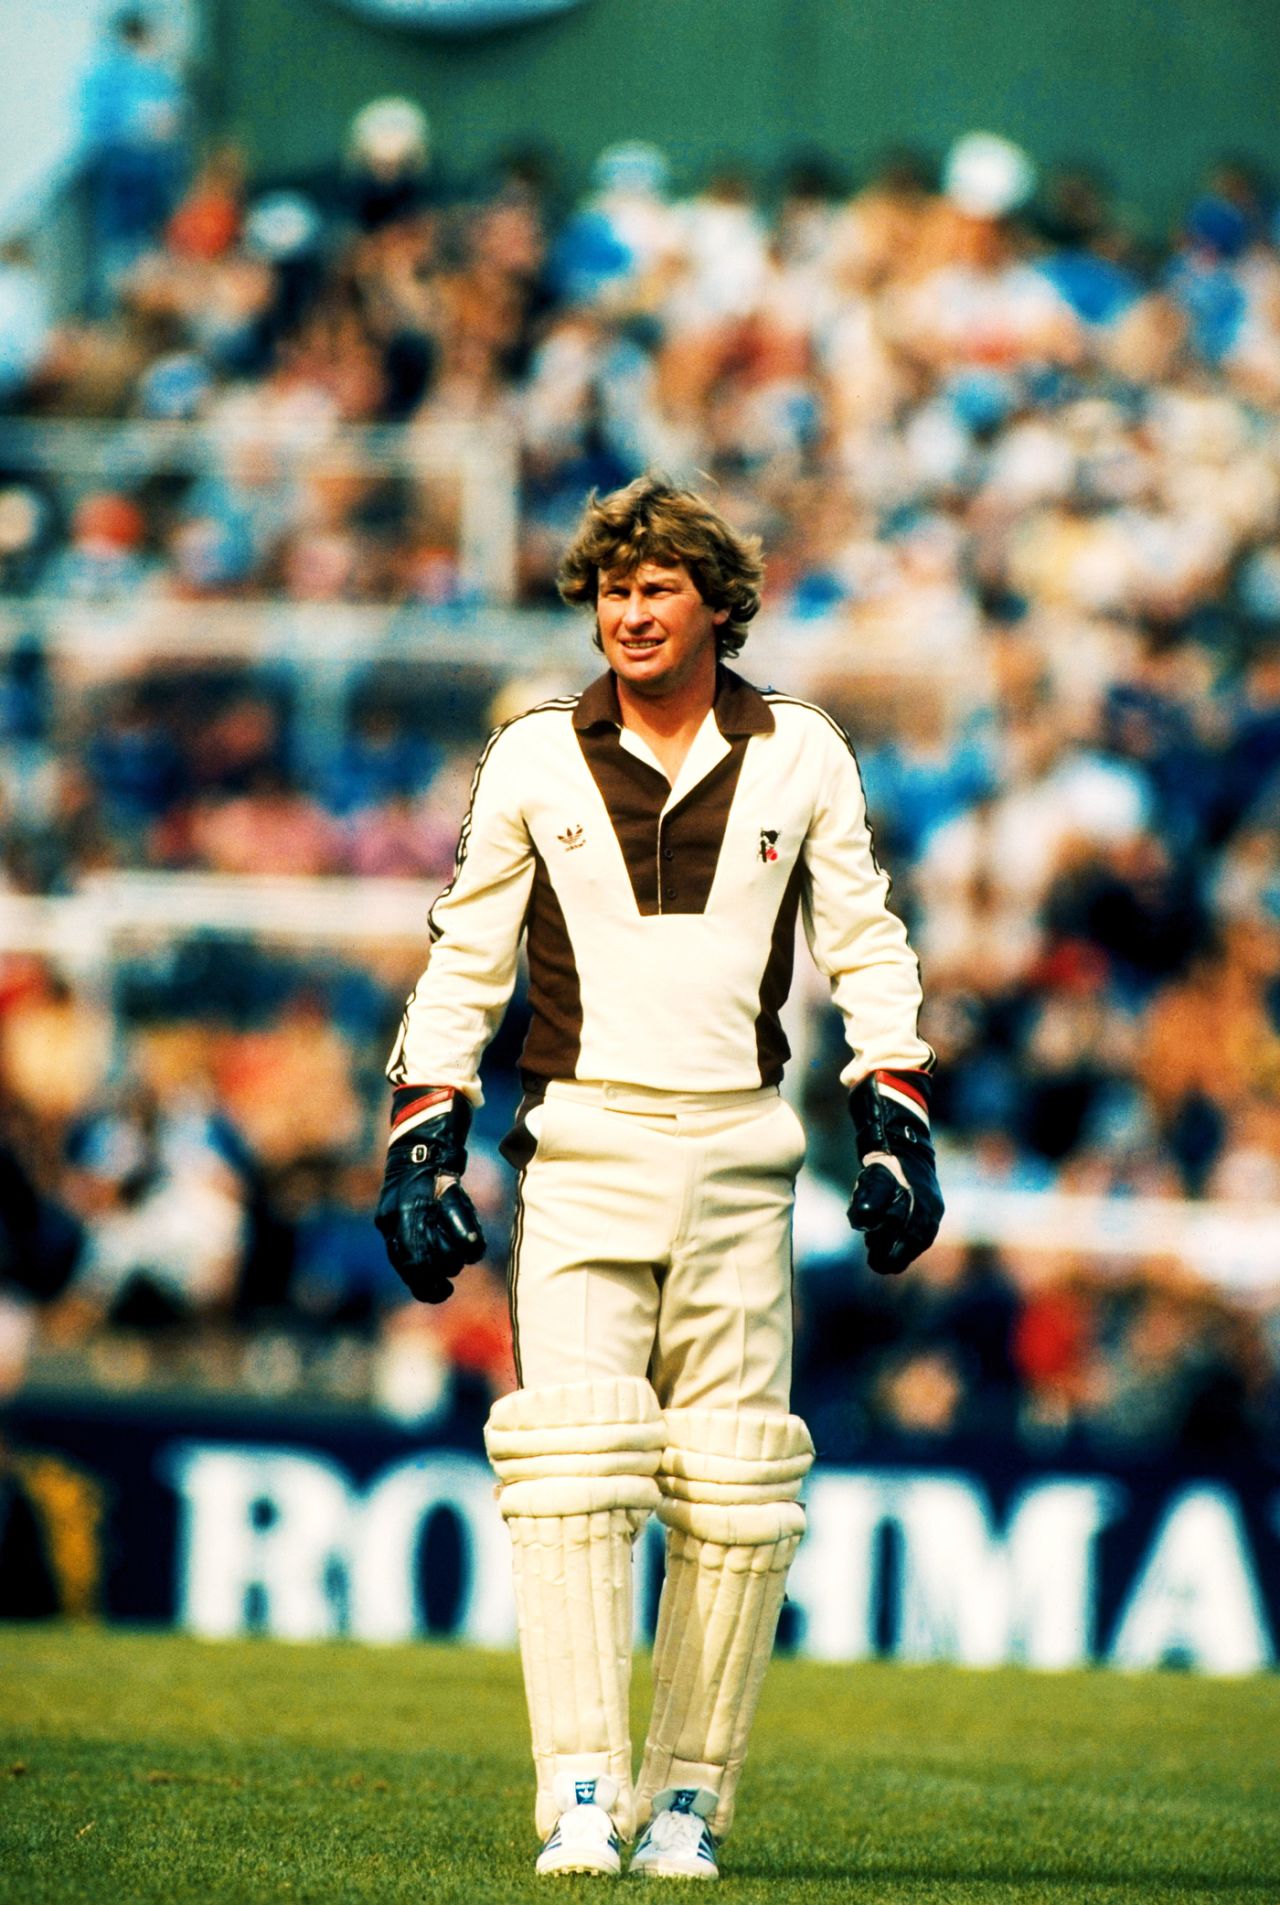 Ian Smith in the field, New Zealand v England, Auckland, February 25, 1984